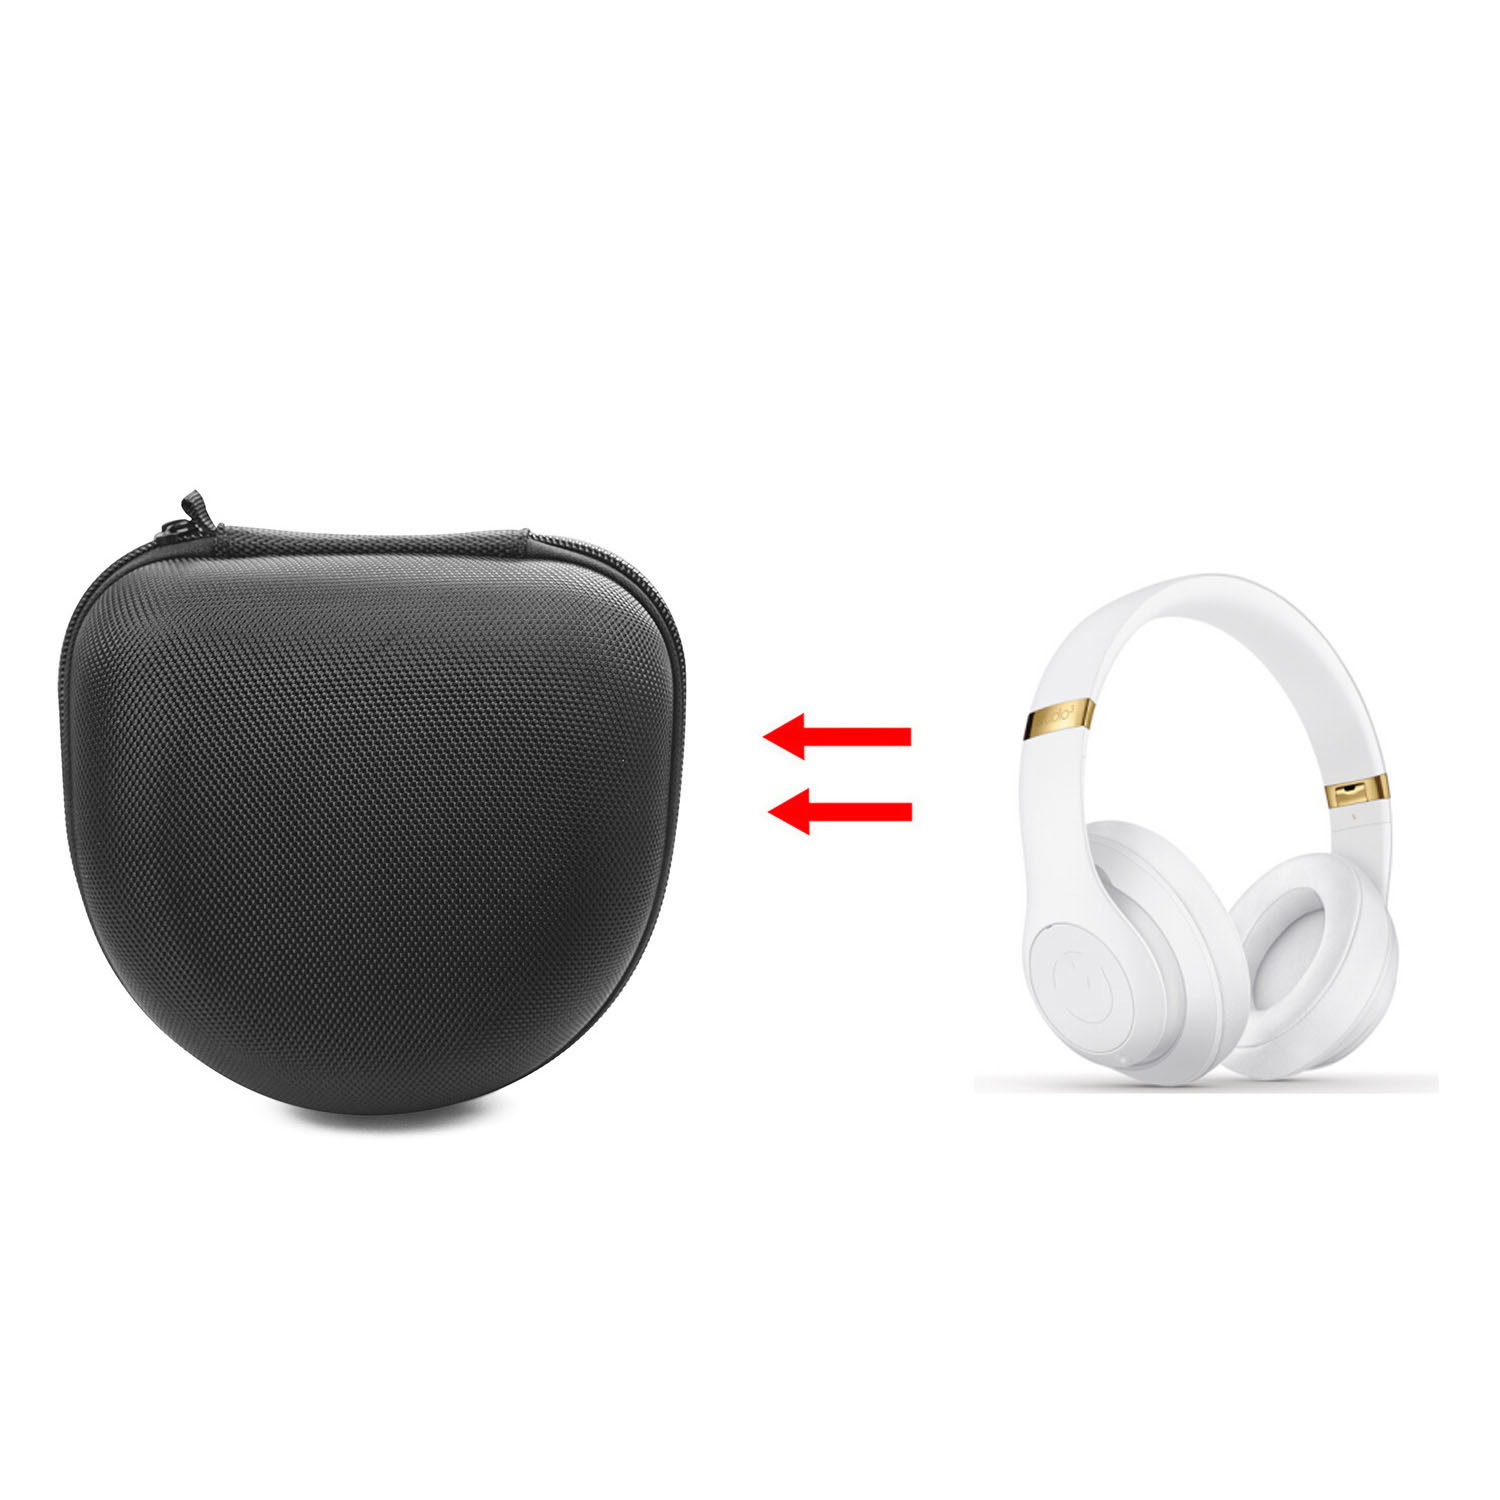 Bakeey-Headphone-Storage-Bag-Dustproof-Portable-Hard-Carrying-Case-Wireless-Head-Mounted-Headset-Pro-1800702-1